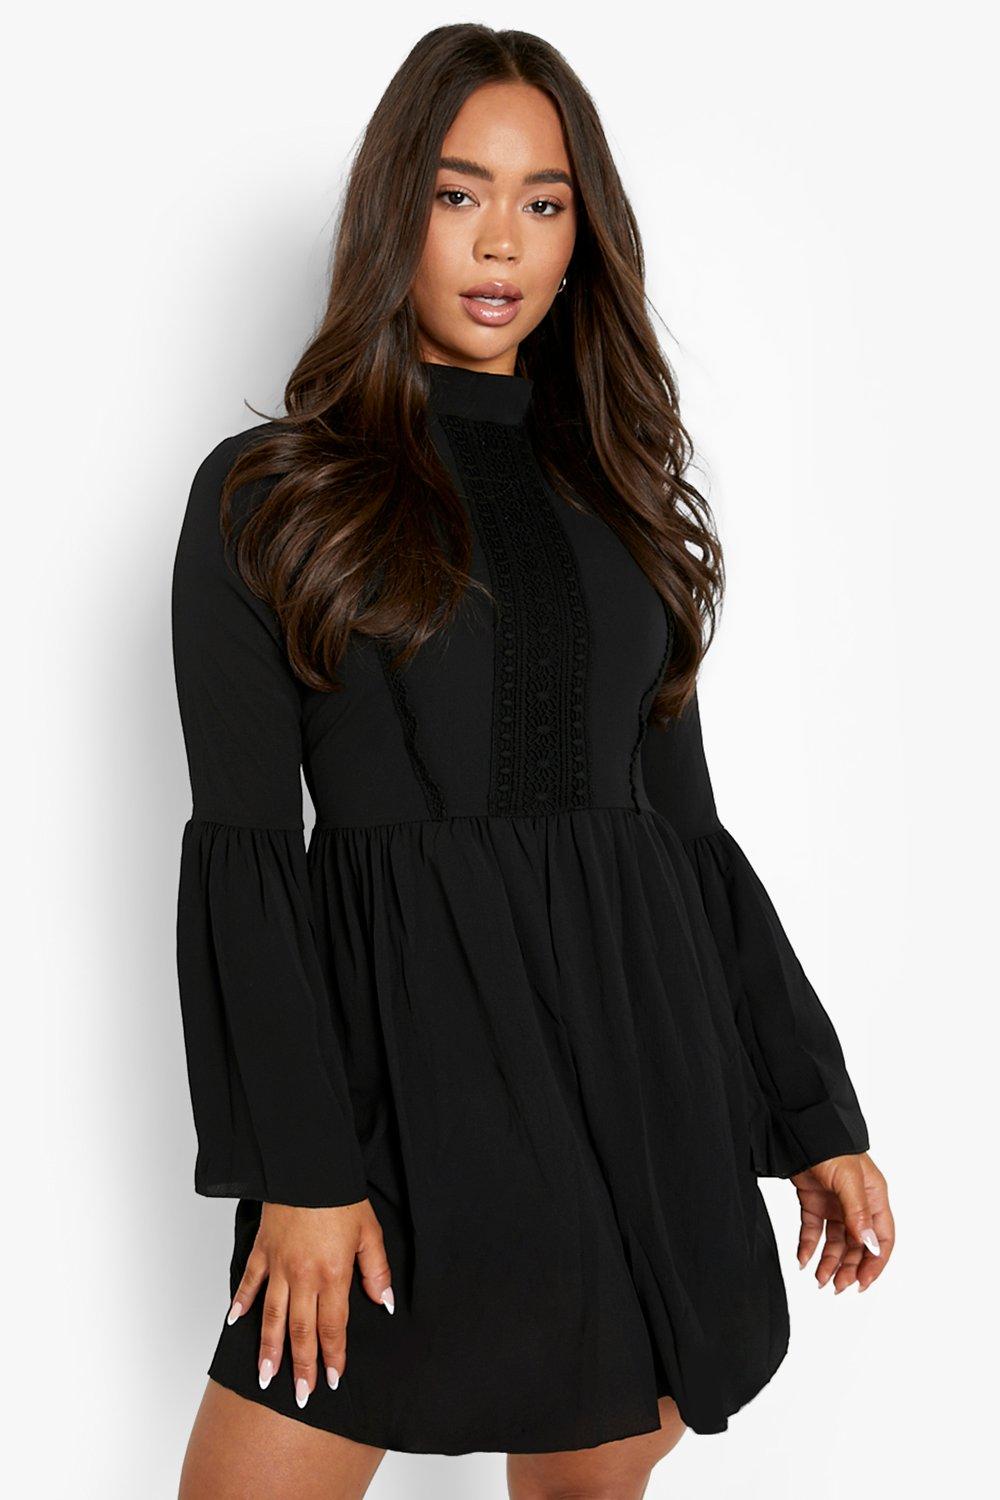 black smock dress with sleeves